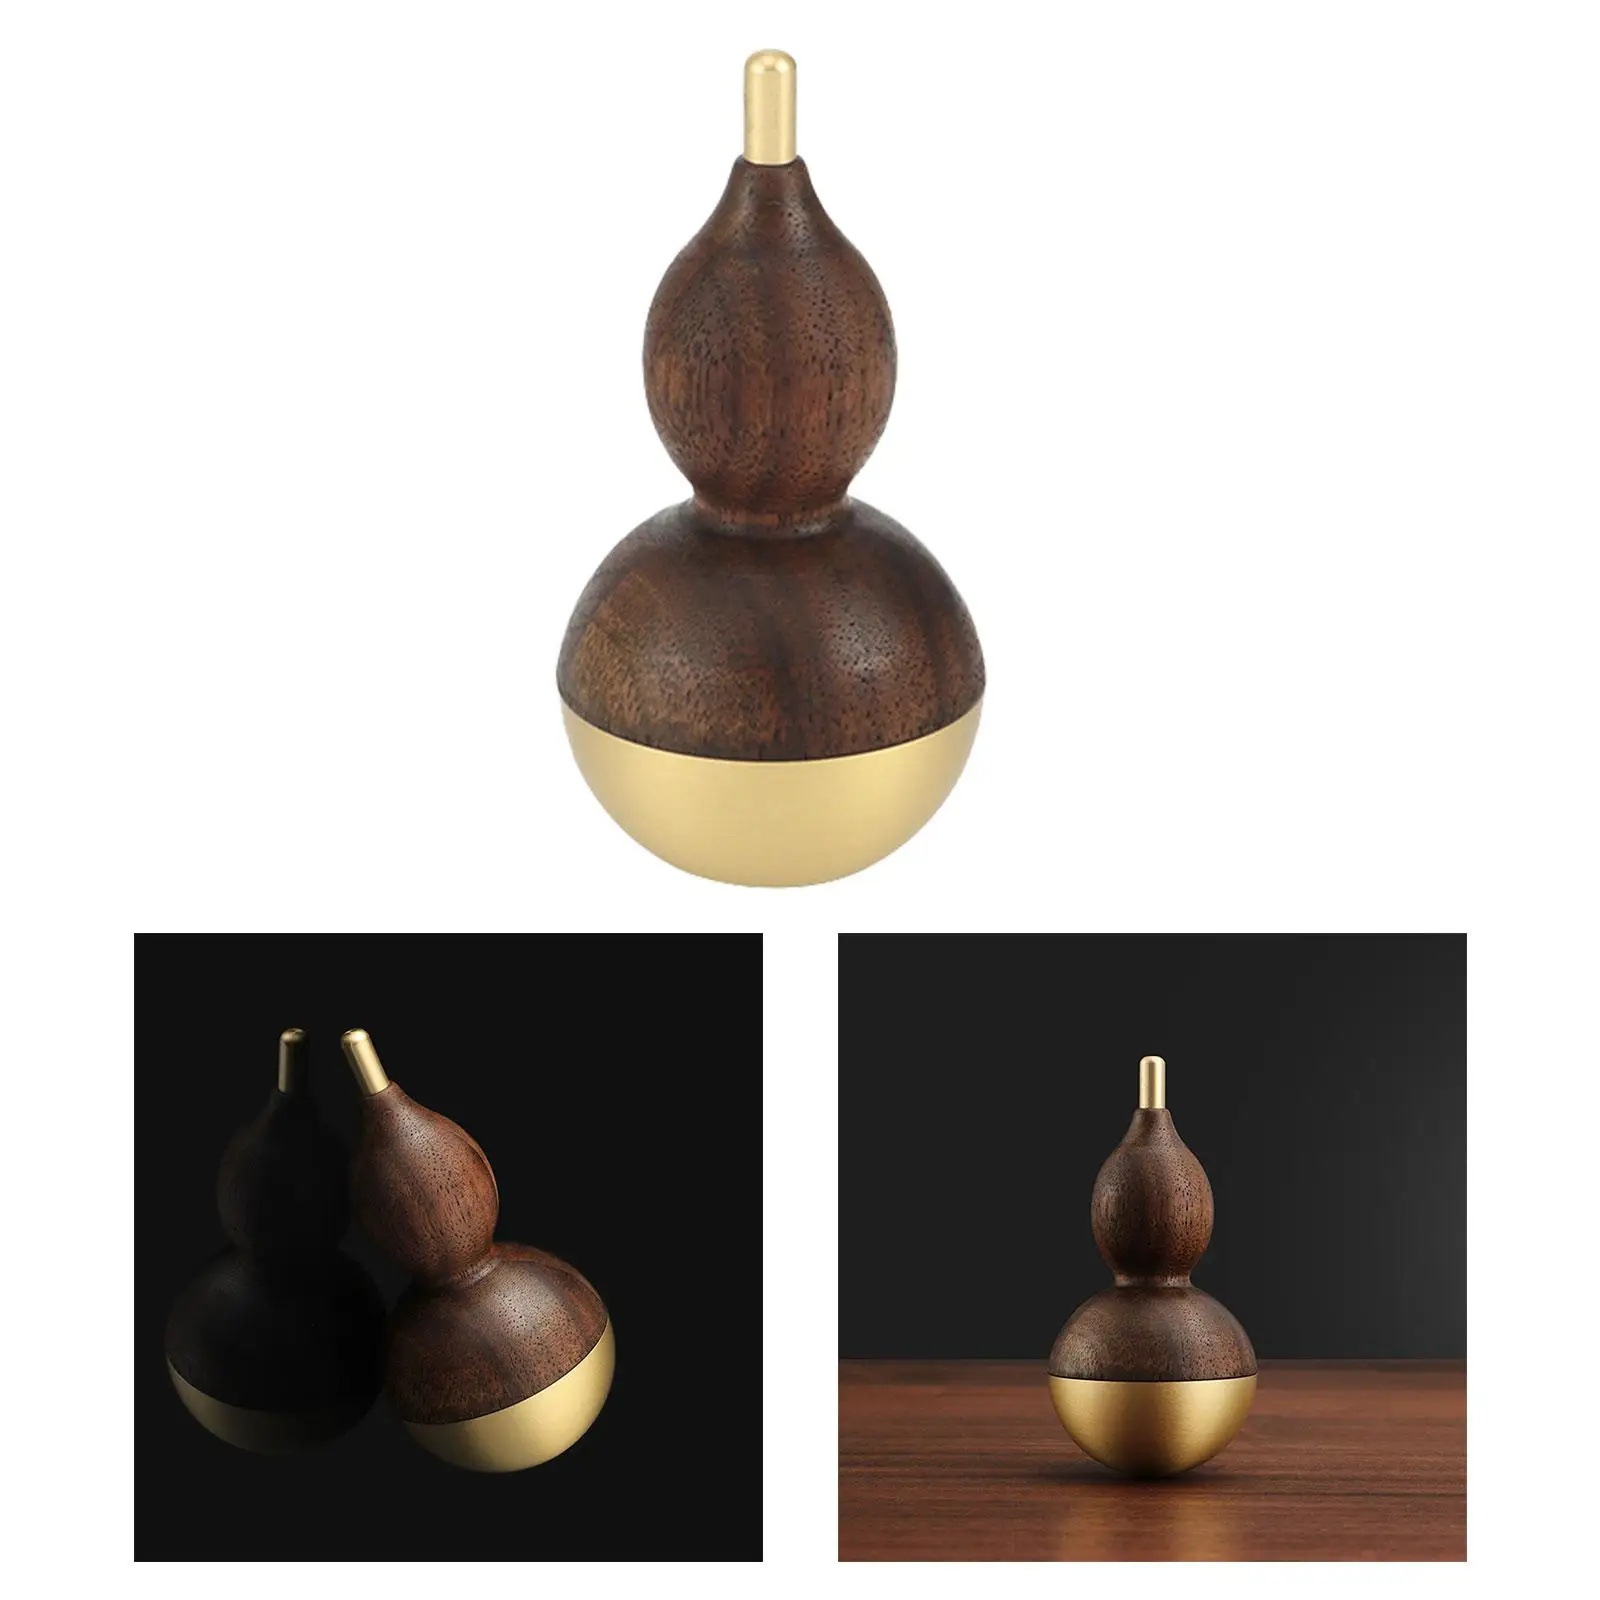  Tumbler Gourd Lucky Ornament Feng Shui Figurine for Car Home Desktop Decor Crafts